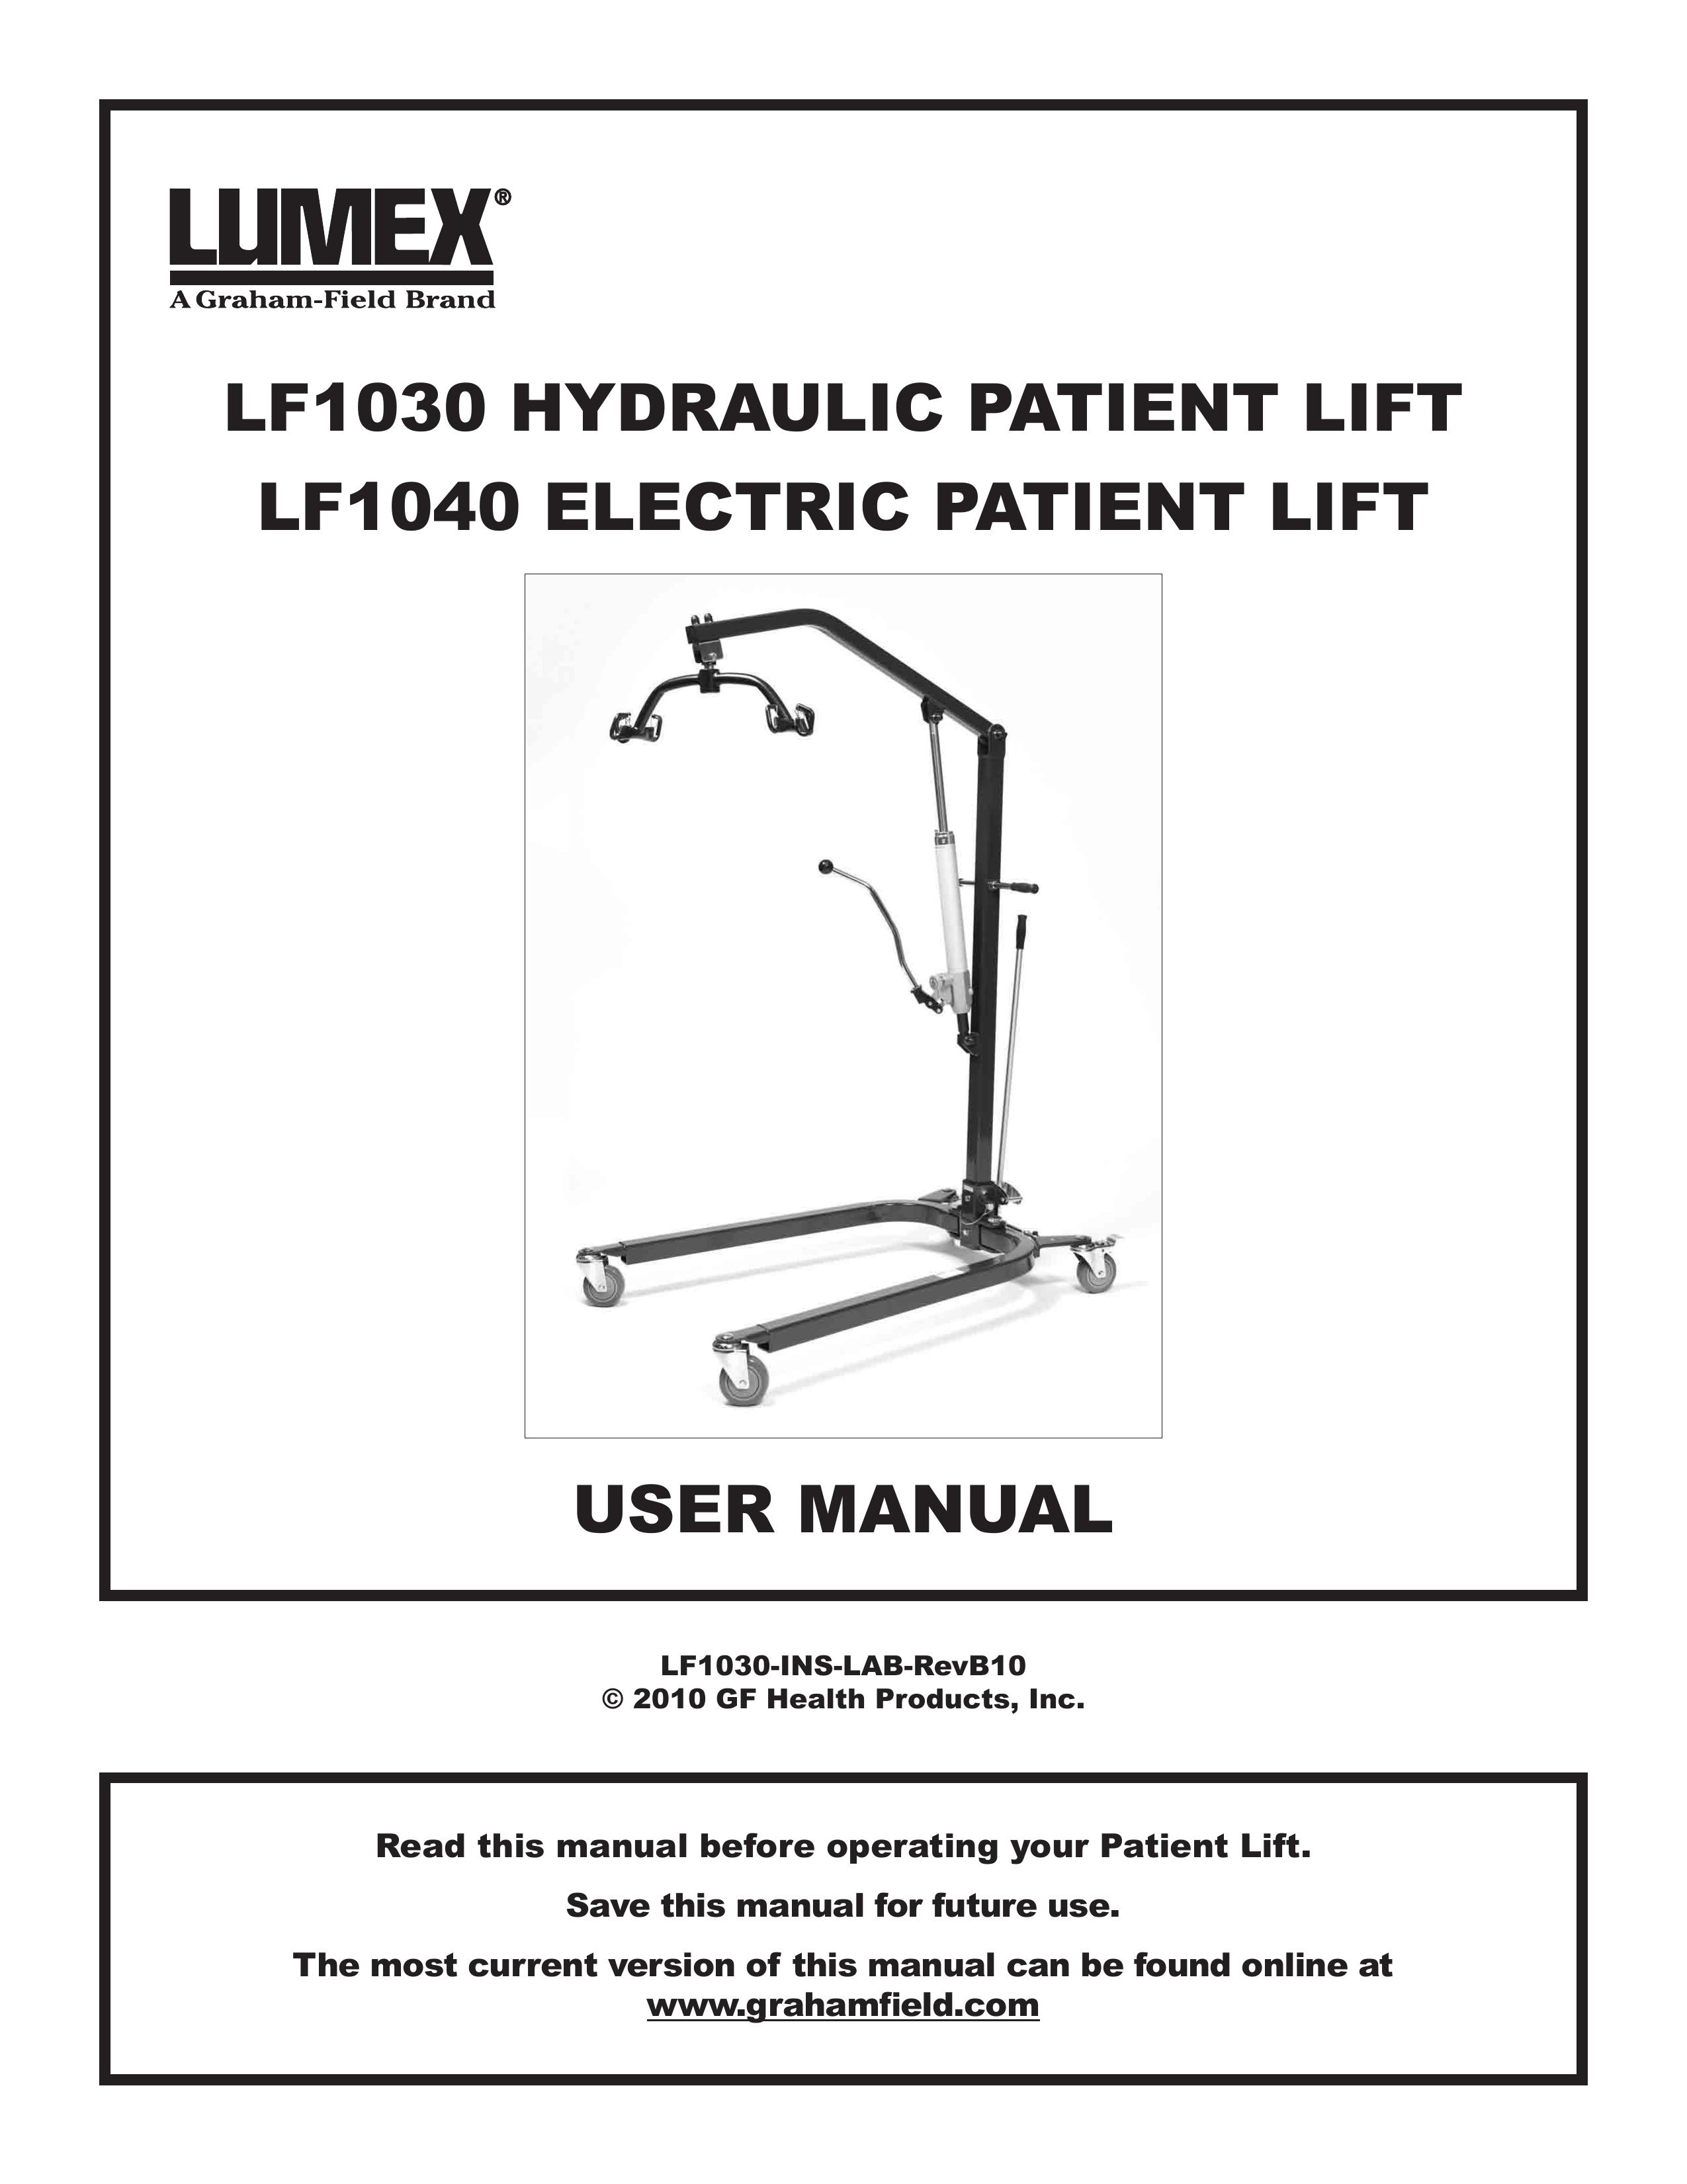 Graham Field LF1030 Personal Lift User Manual